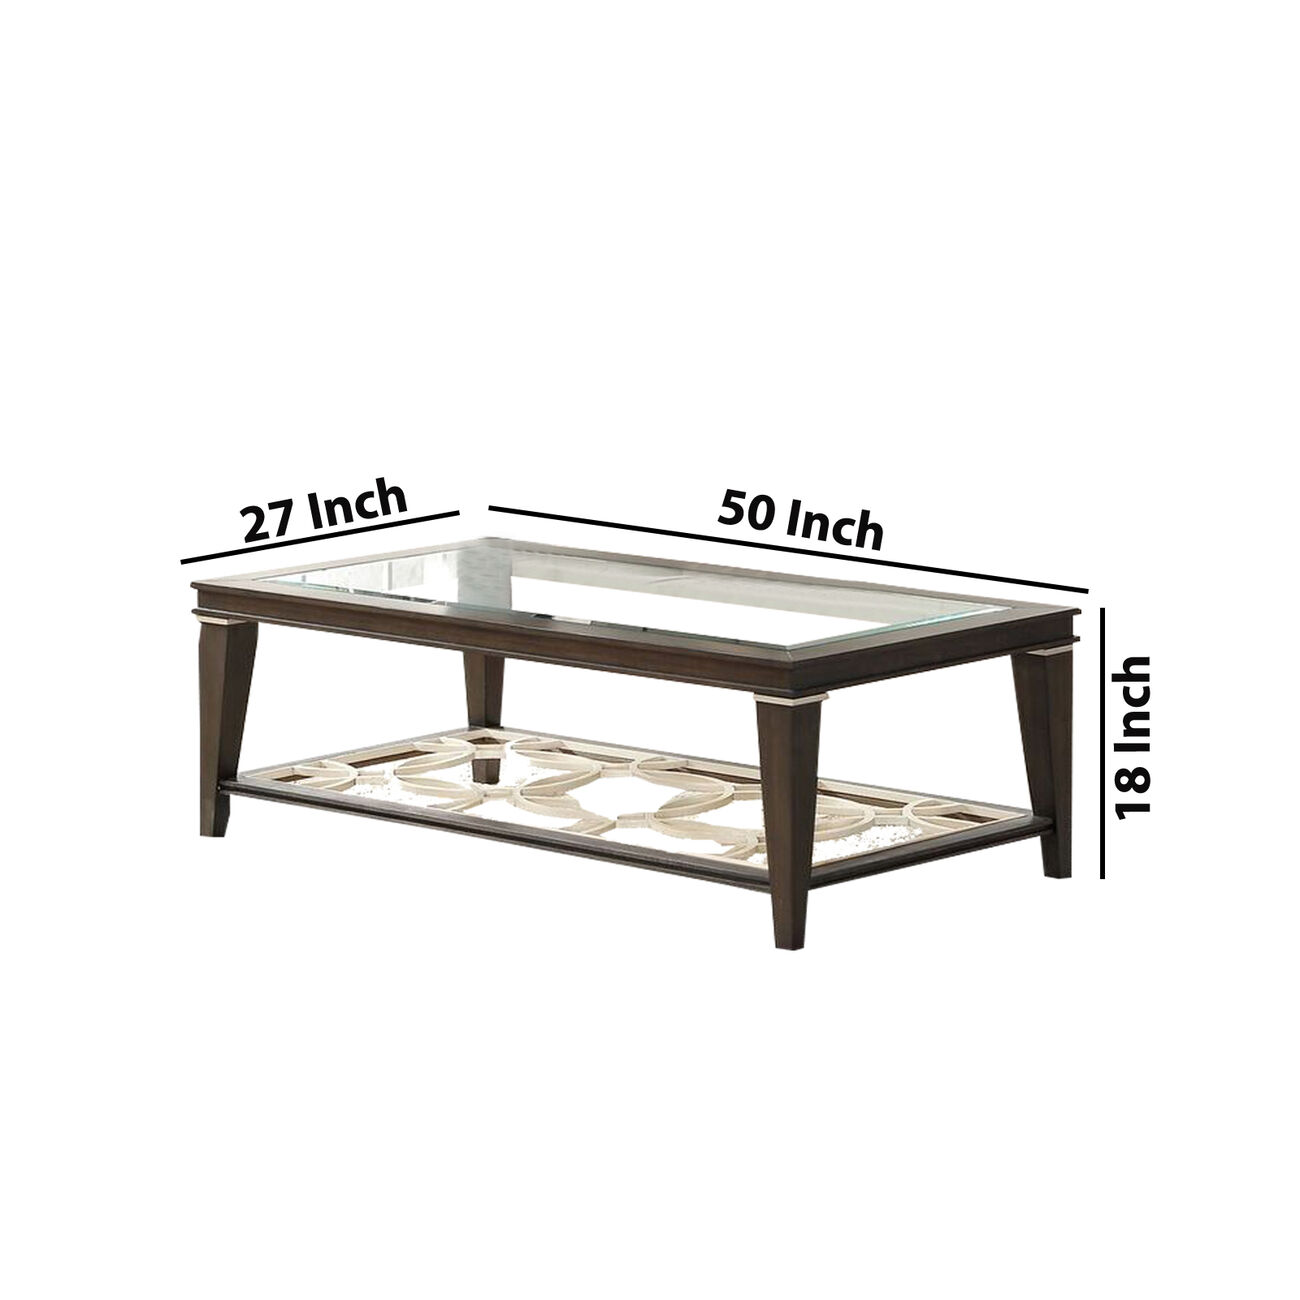 Rectangular Glass Top Coffee Table with Lattice design Bottom Shelf, Brown